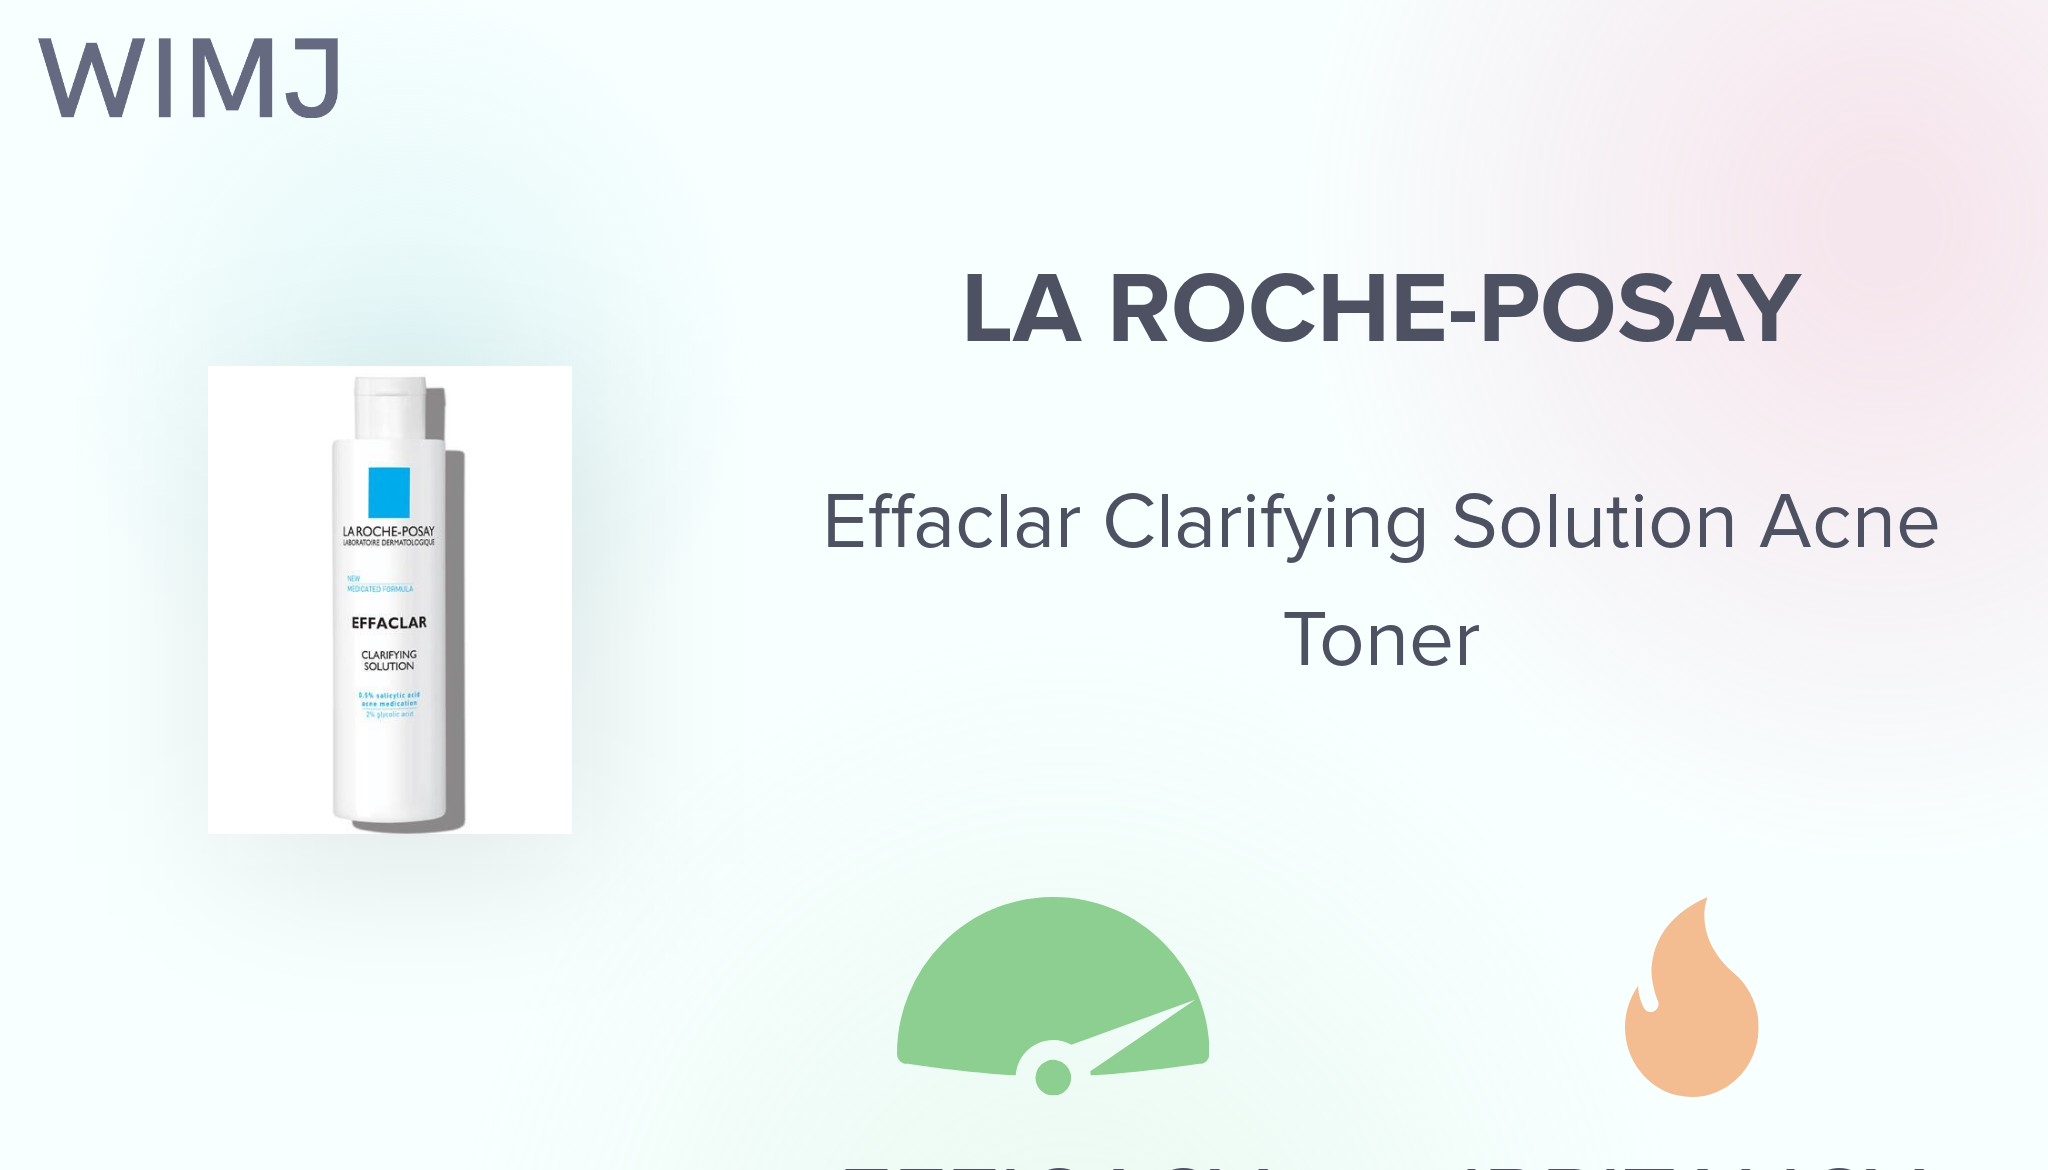 La Roche-Posay Effaclar Clarifying Solution